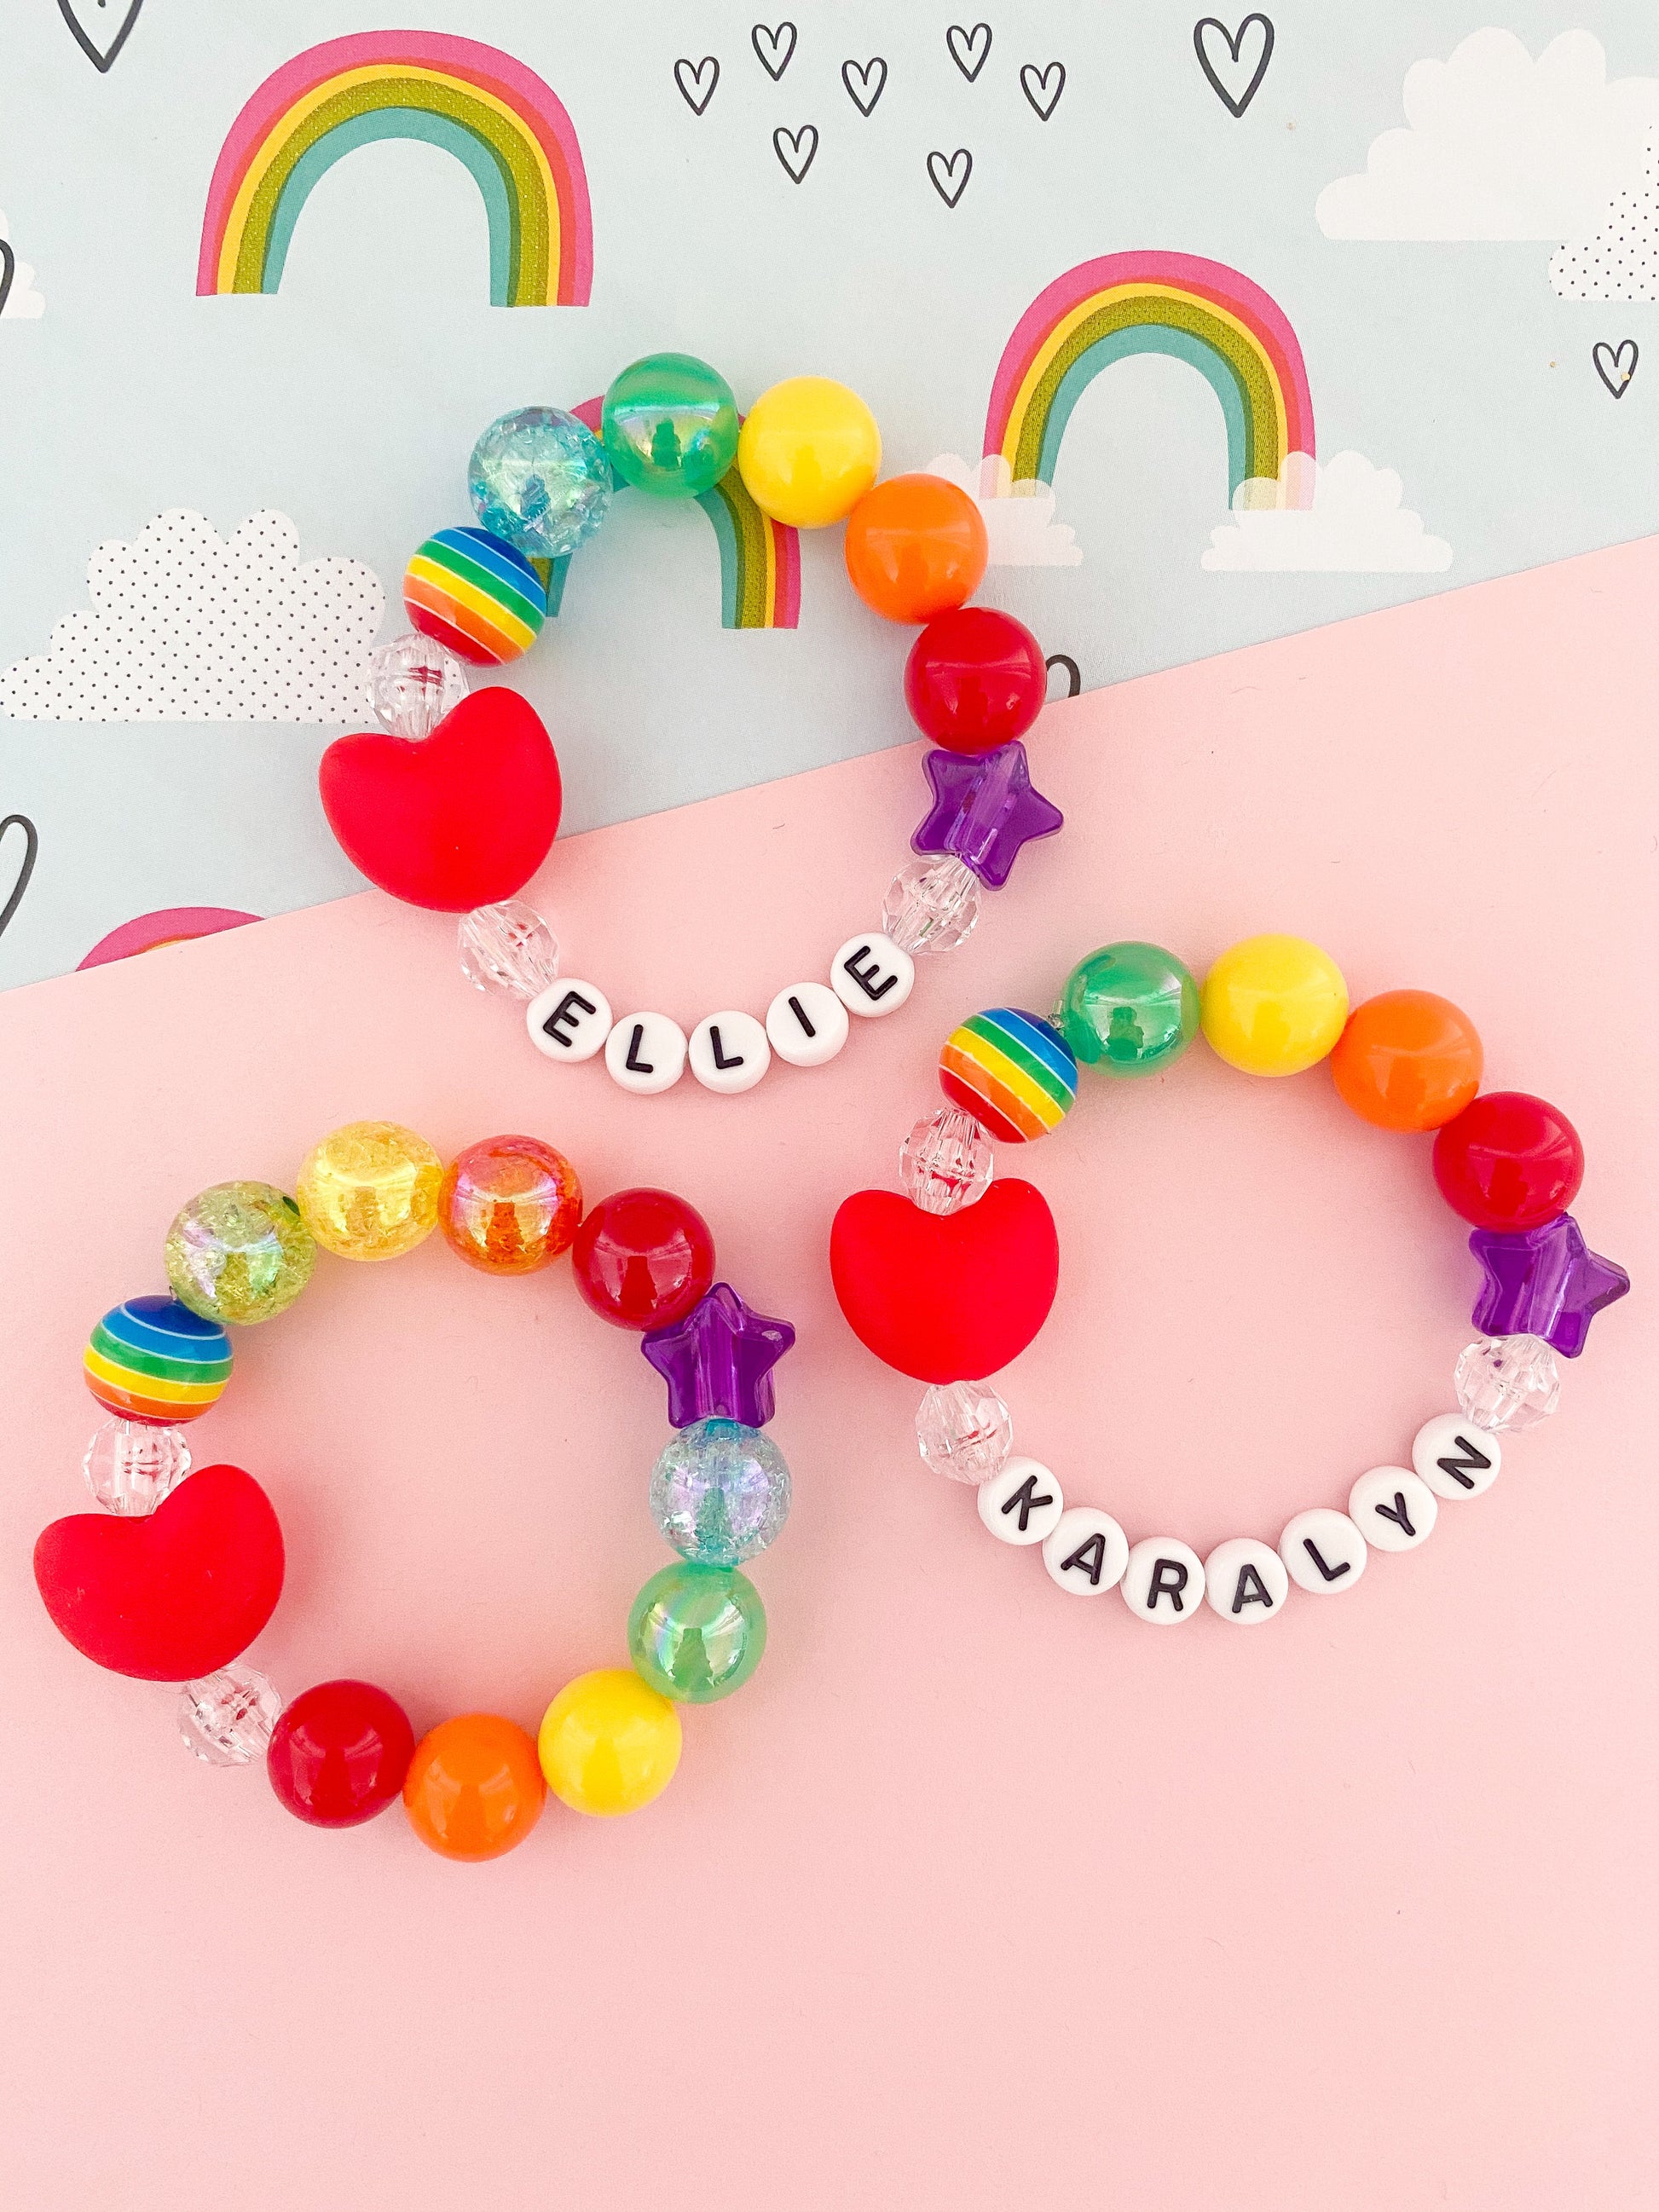 BFF Kids Bracelet Making Kit Personalized Beaded Jewelry DIY Girls Beaded  Heart Initial Friendship Bracelet Kit Make Your Own Gift 